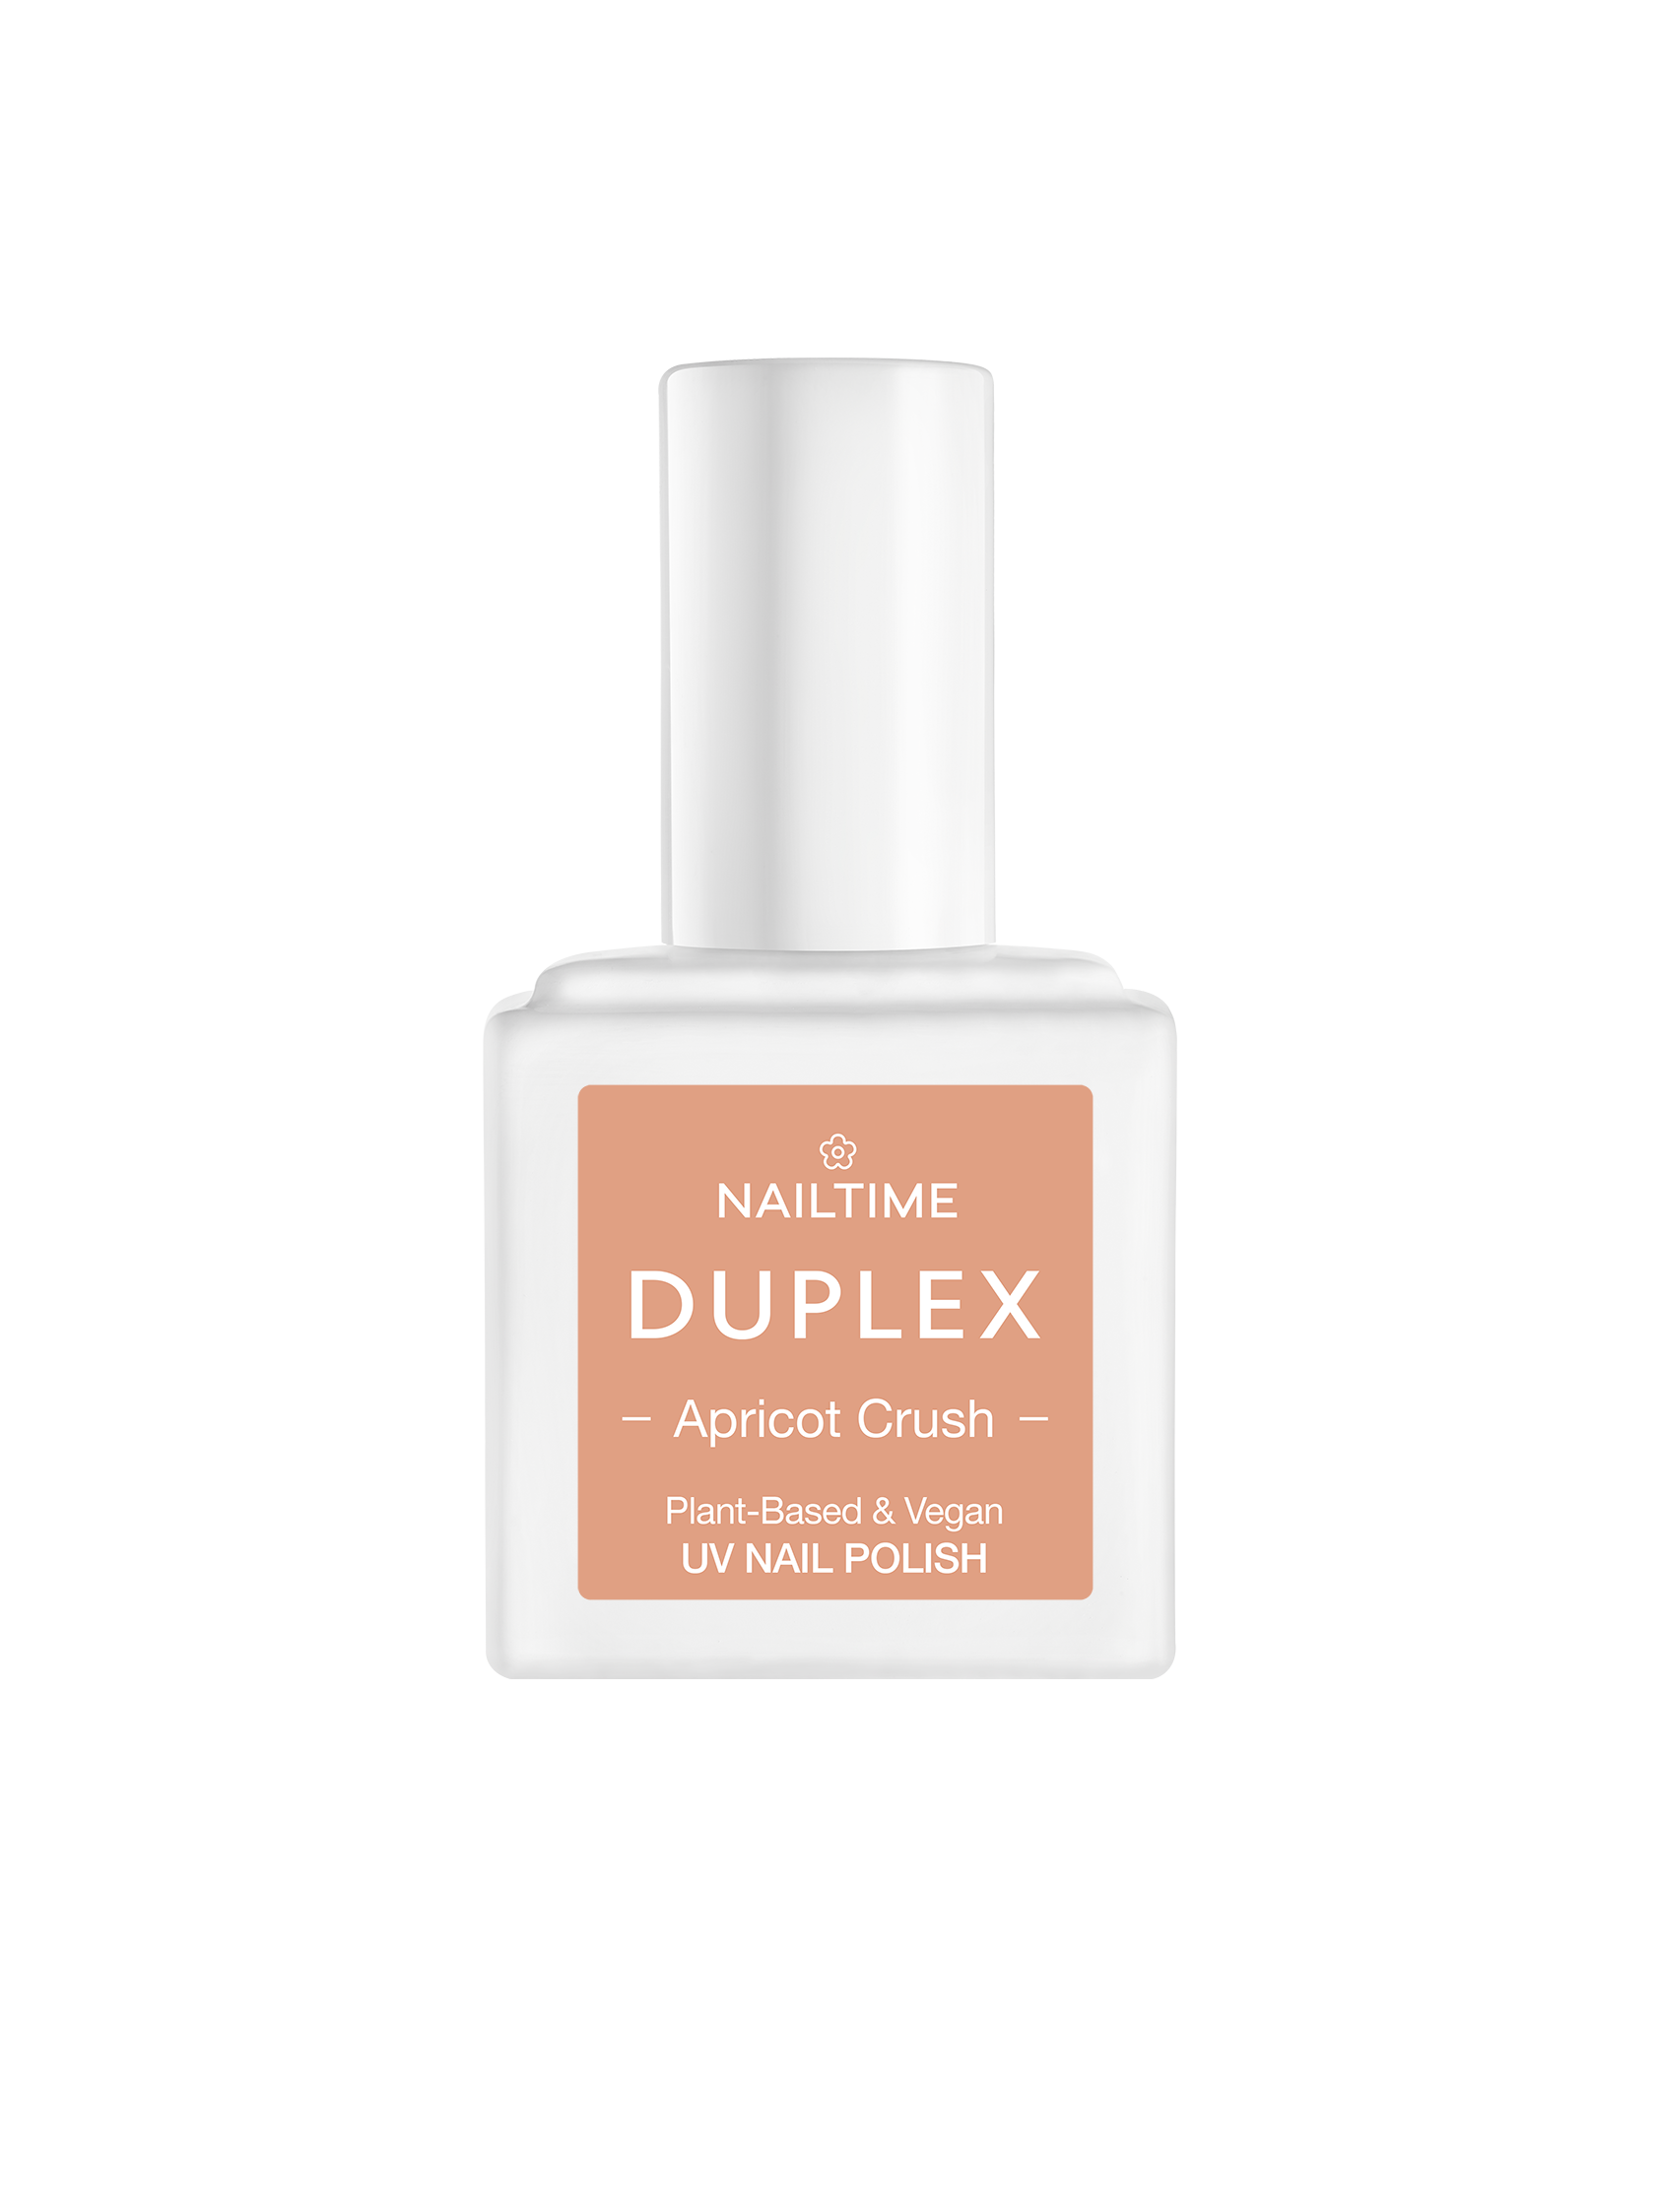 DUPLEX EUPHORIA - Apricot Crush Nagellack | Nailtime